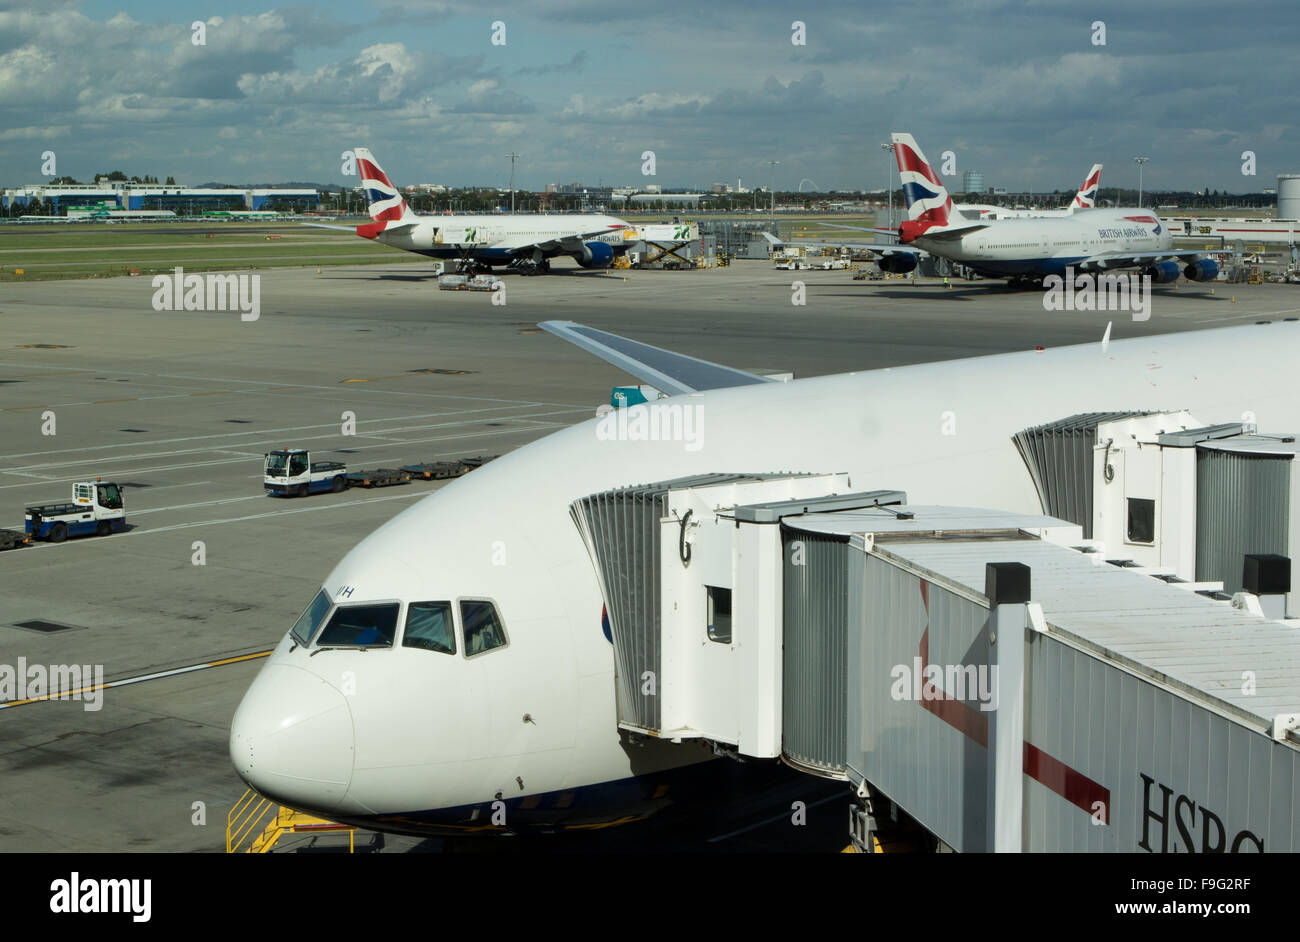 British Airways planes on tarmac at Heathrow Airport, London,England, United Kingdom, Europe Stock Photo